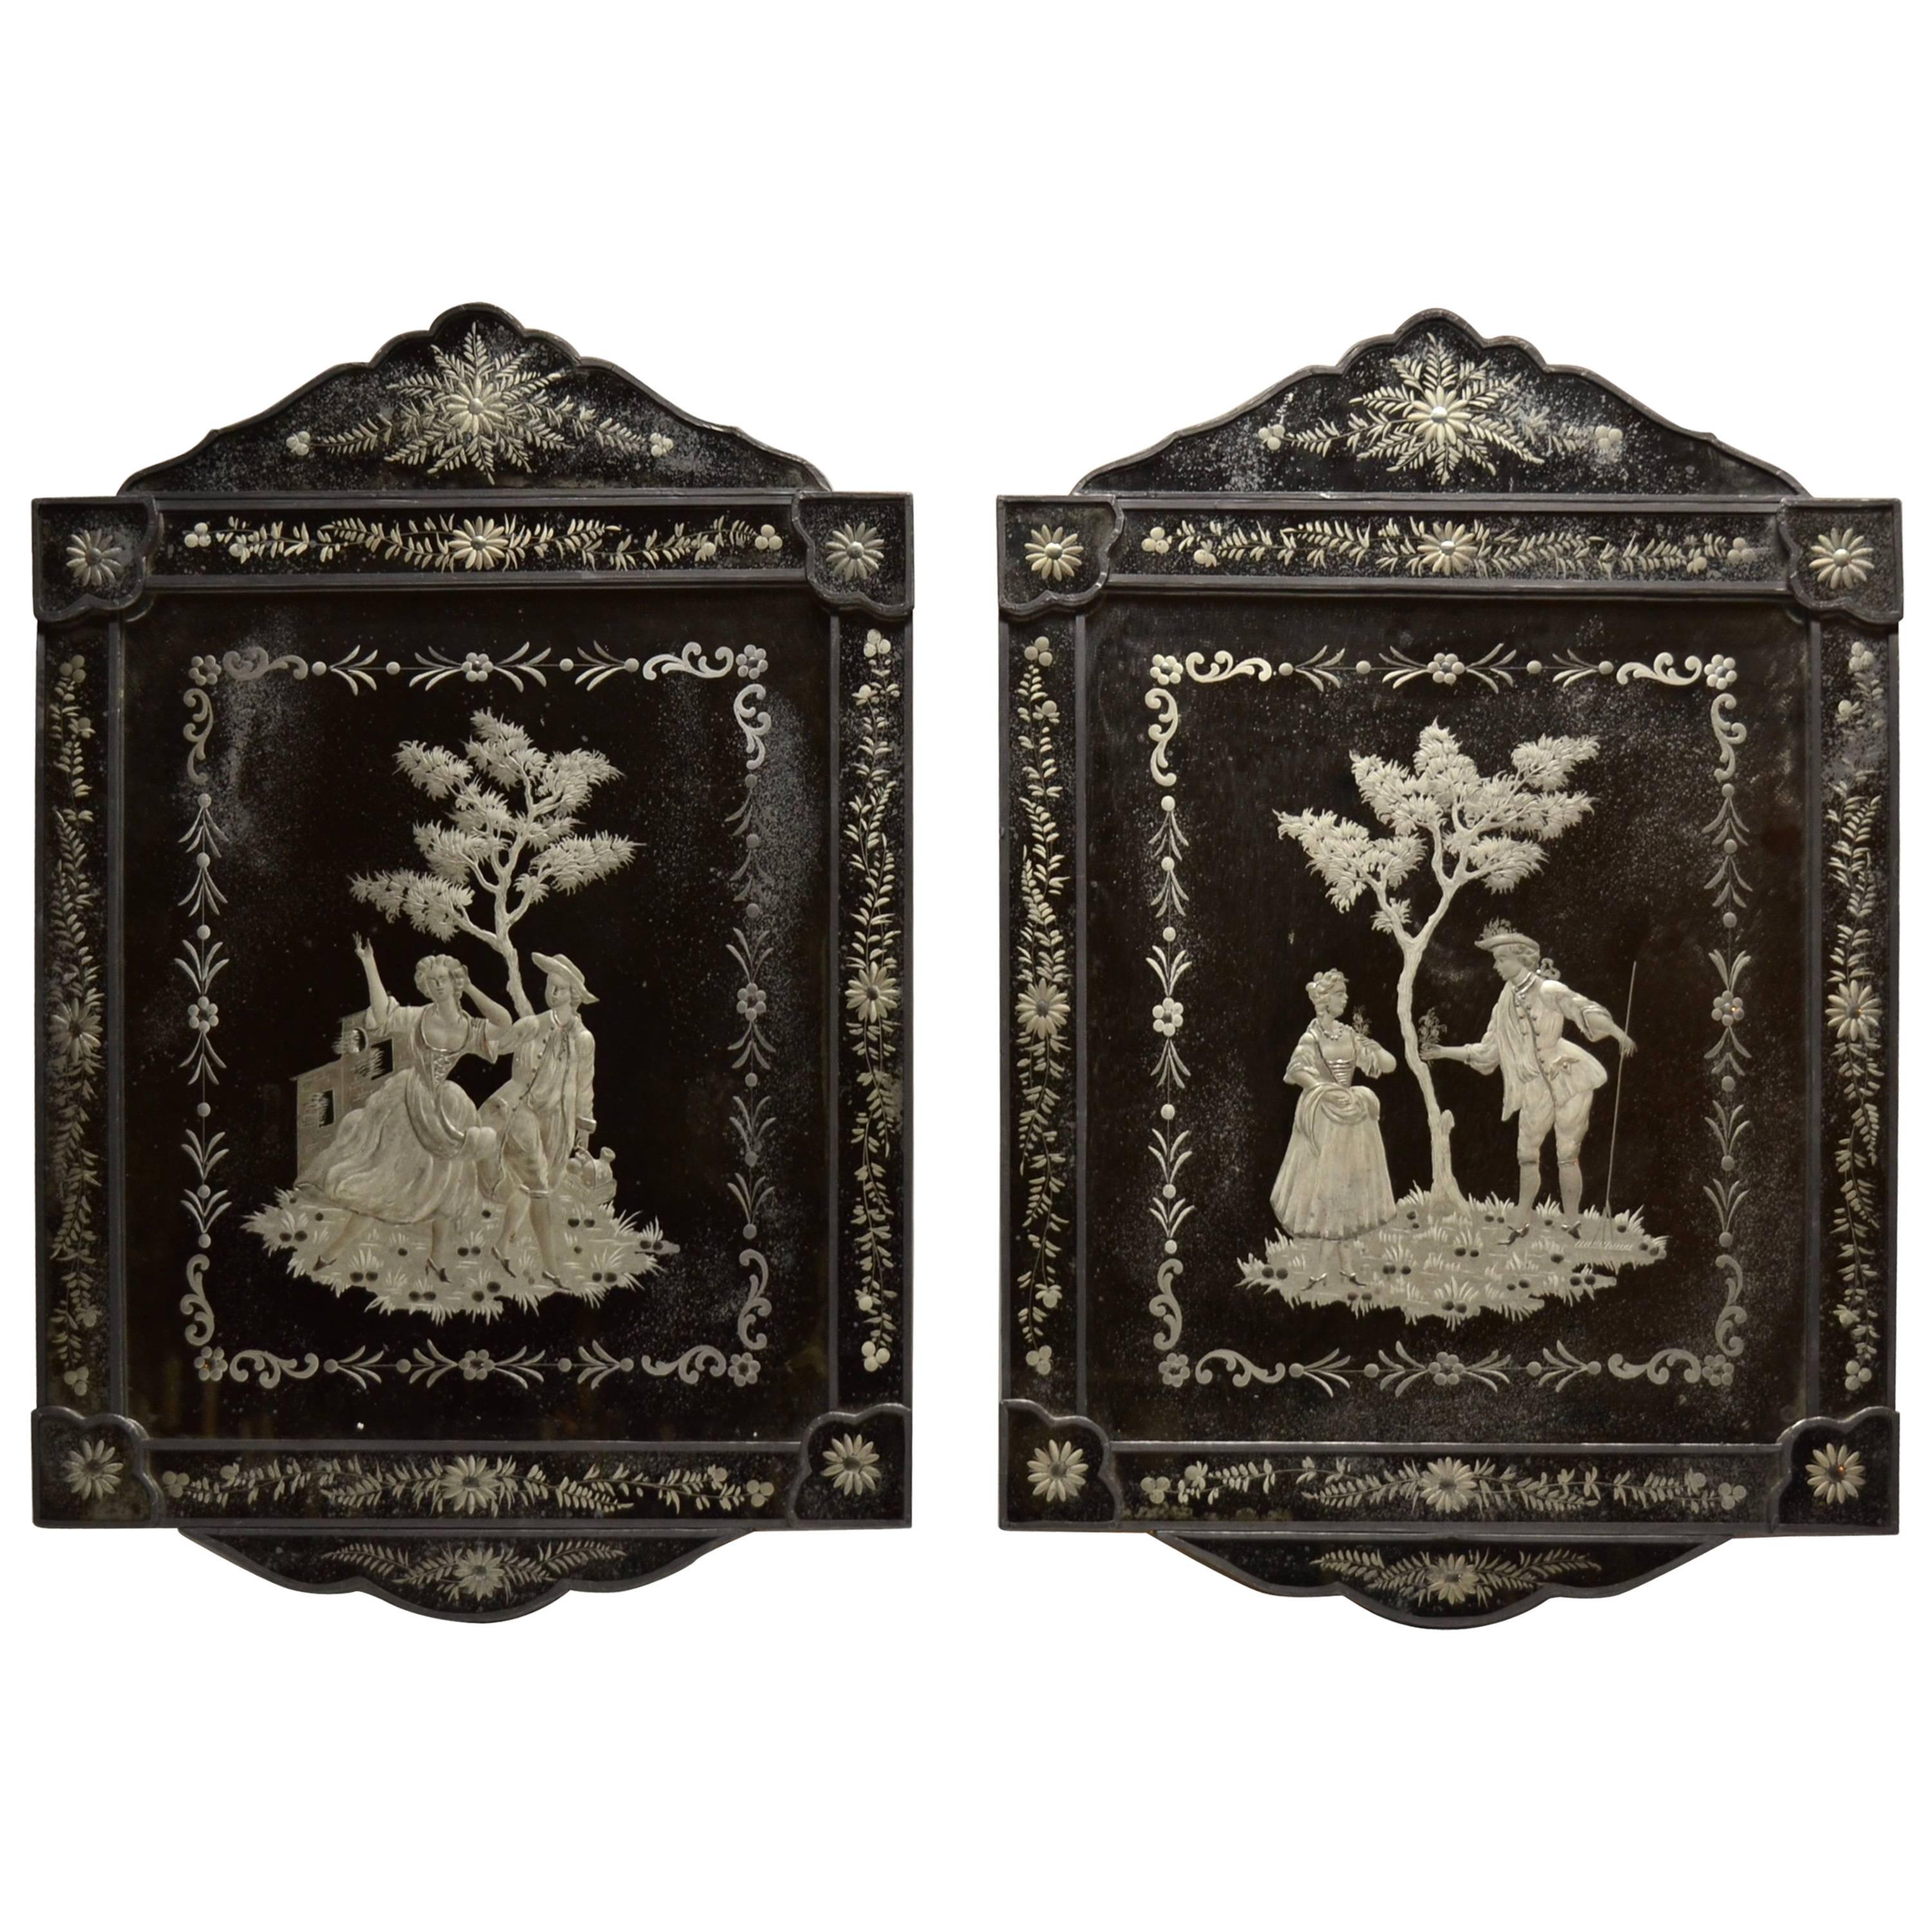 Pair of Venetian Mirrors Delicately Engraved